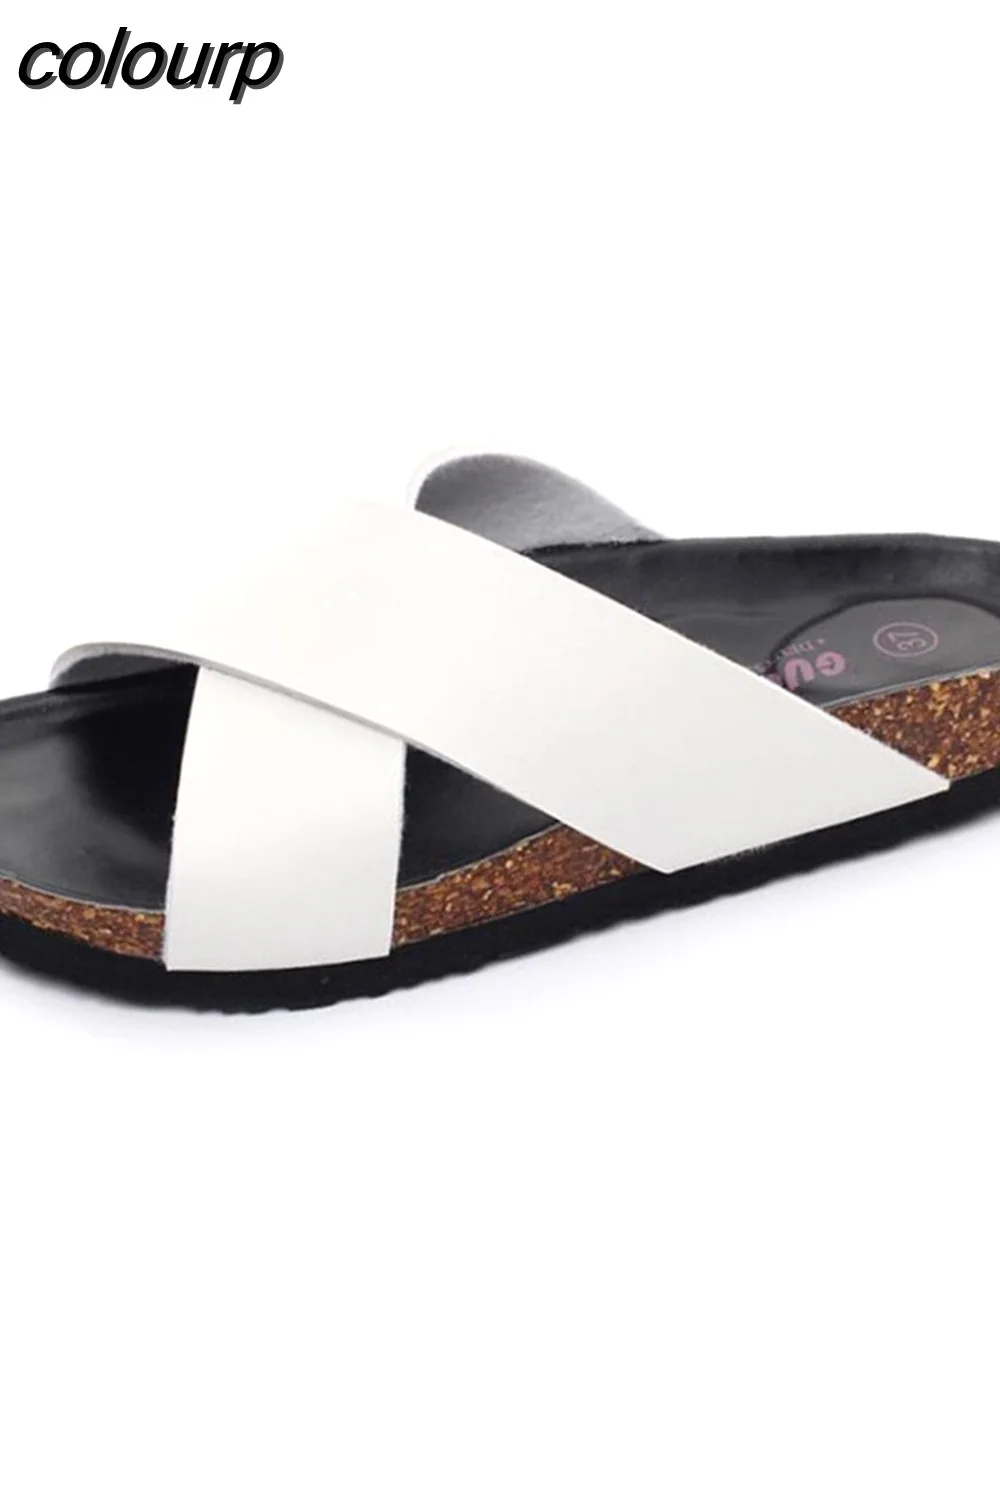 colourp 2023 Unisex Fashion Men Beach Cross Cork Slippers Summer Solid Color Non-slip Outside Women Slide Shoe High Quality